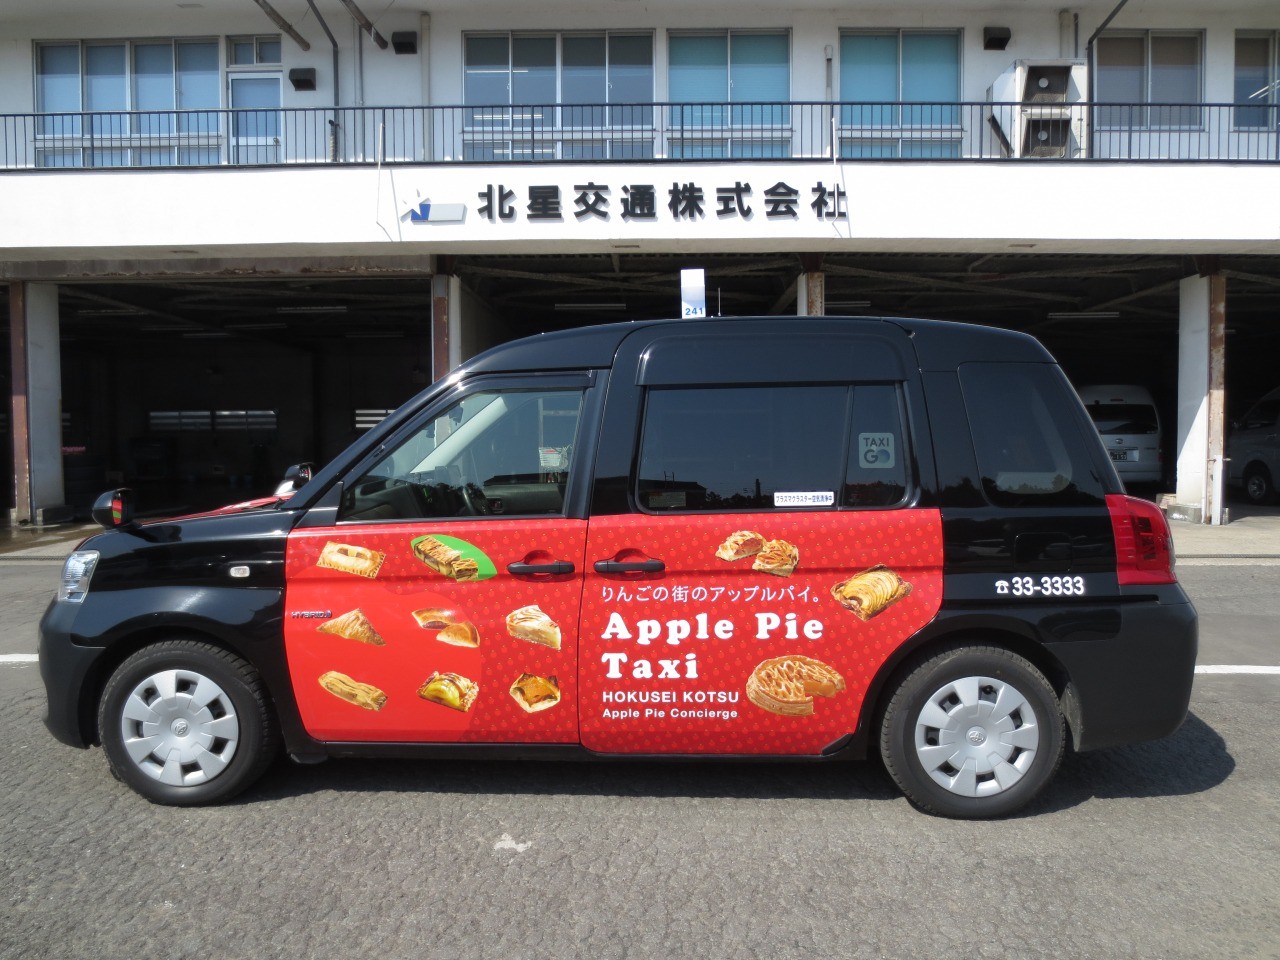 Apple Pai taxi